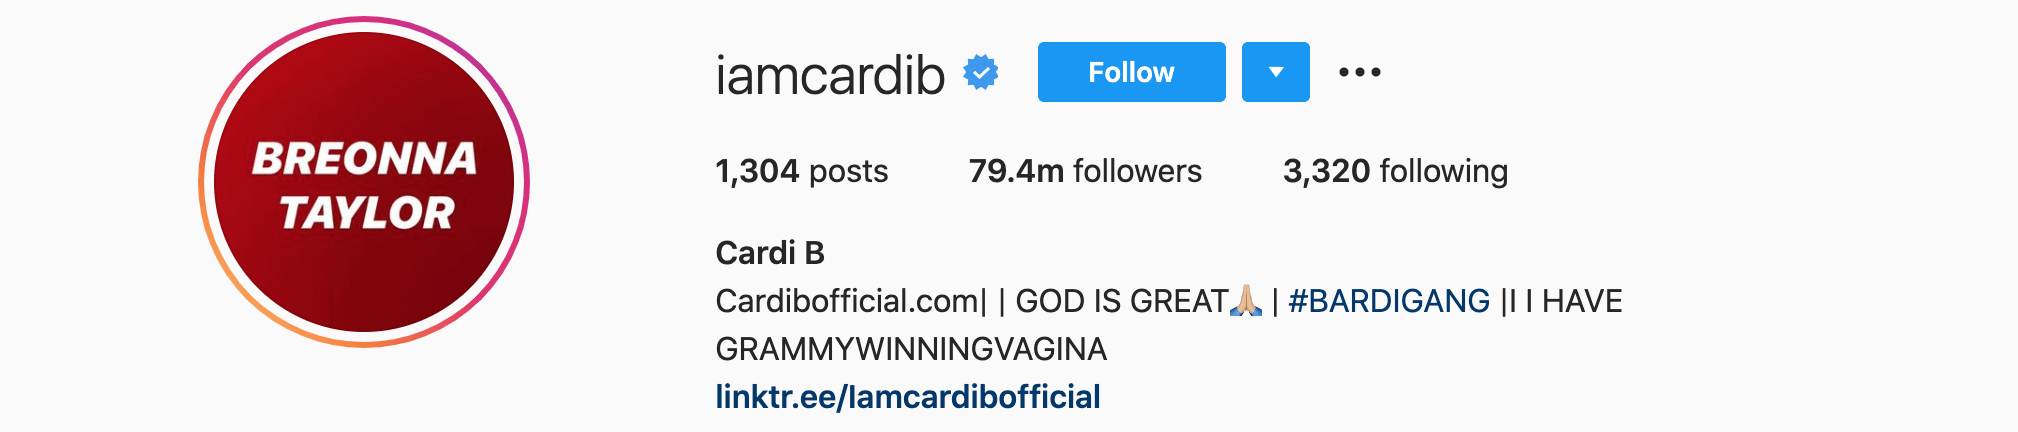 Top Instagram Influencers - CARDI B